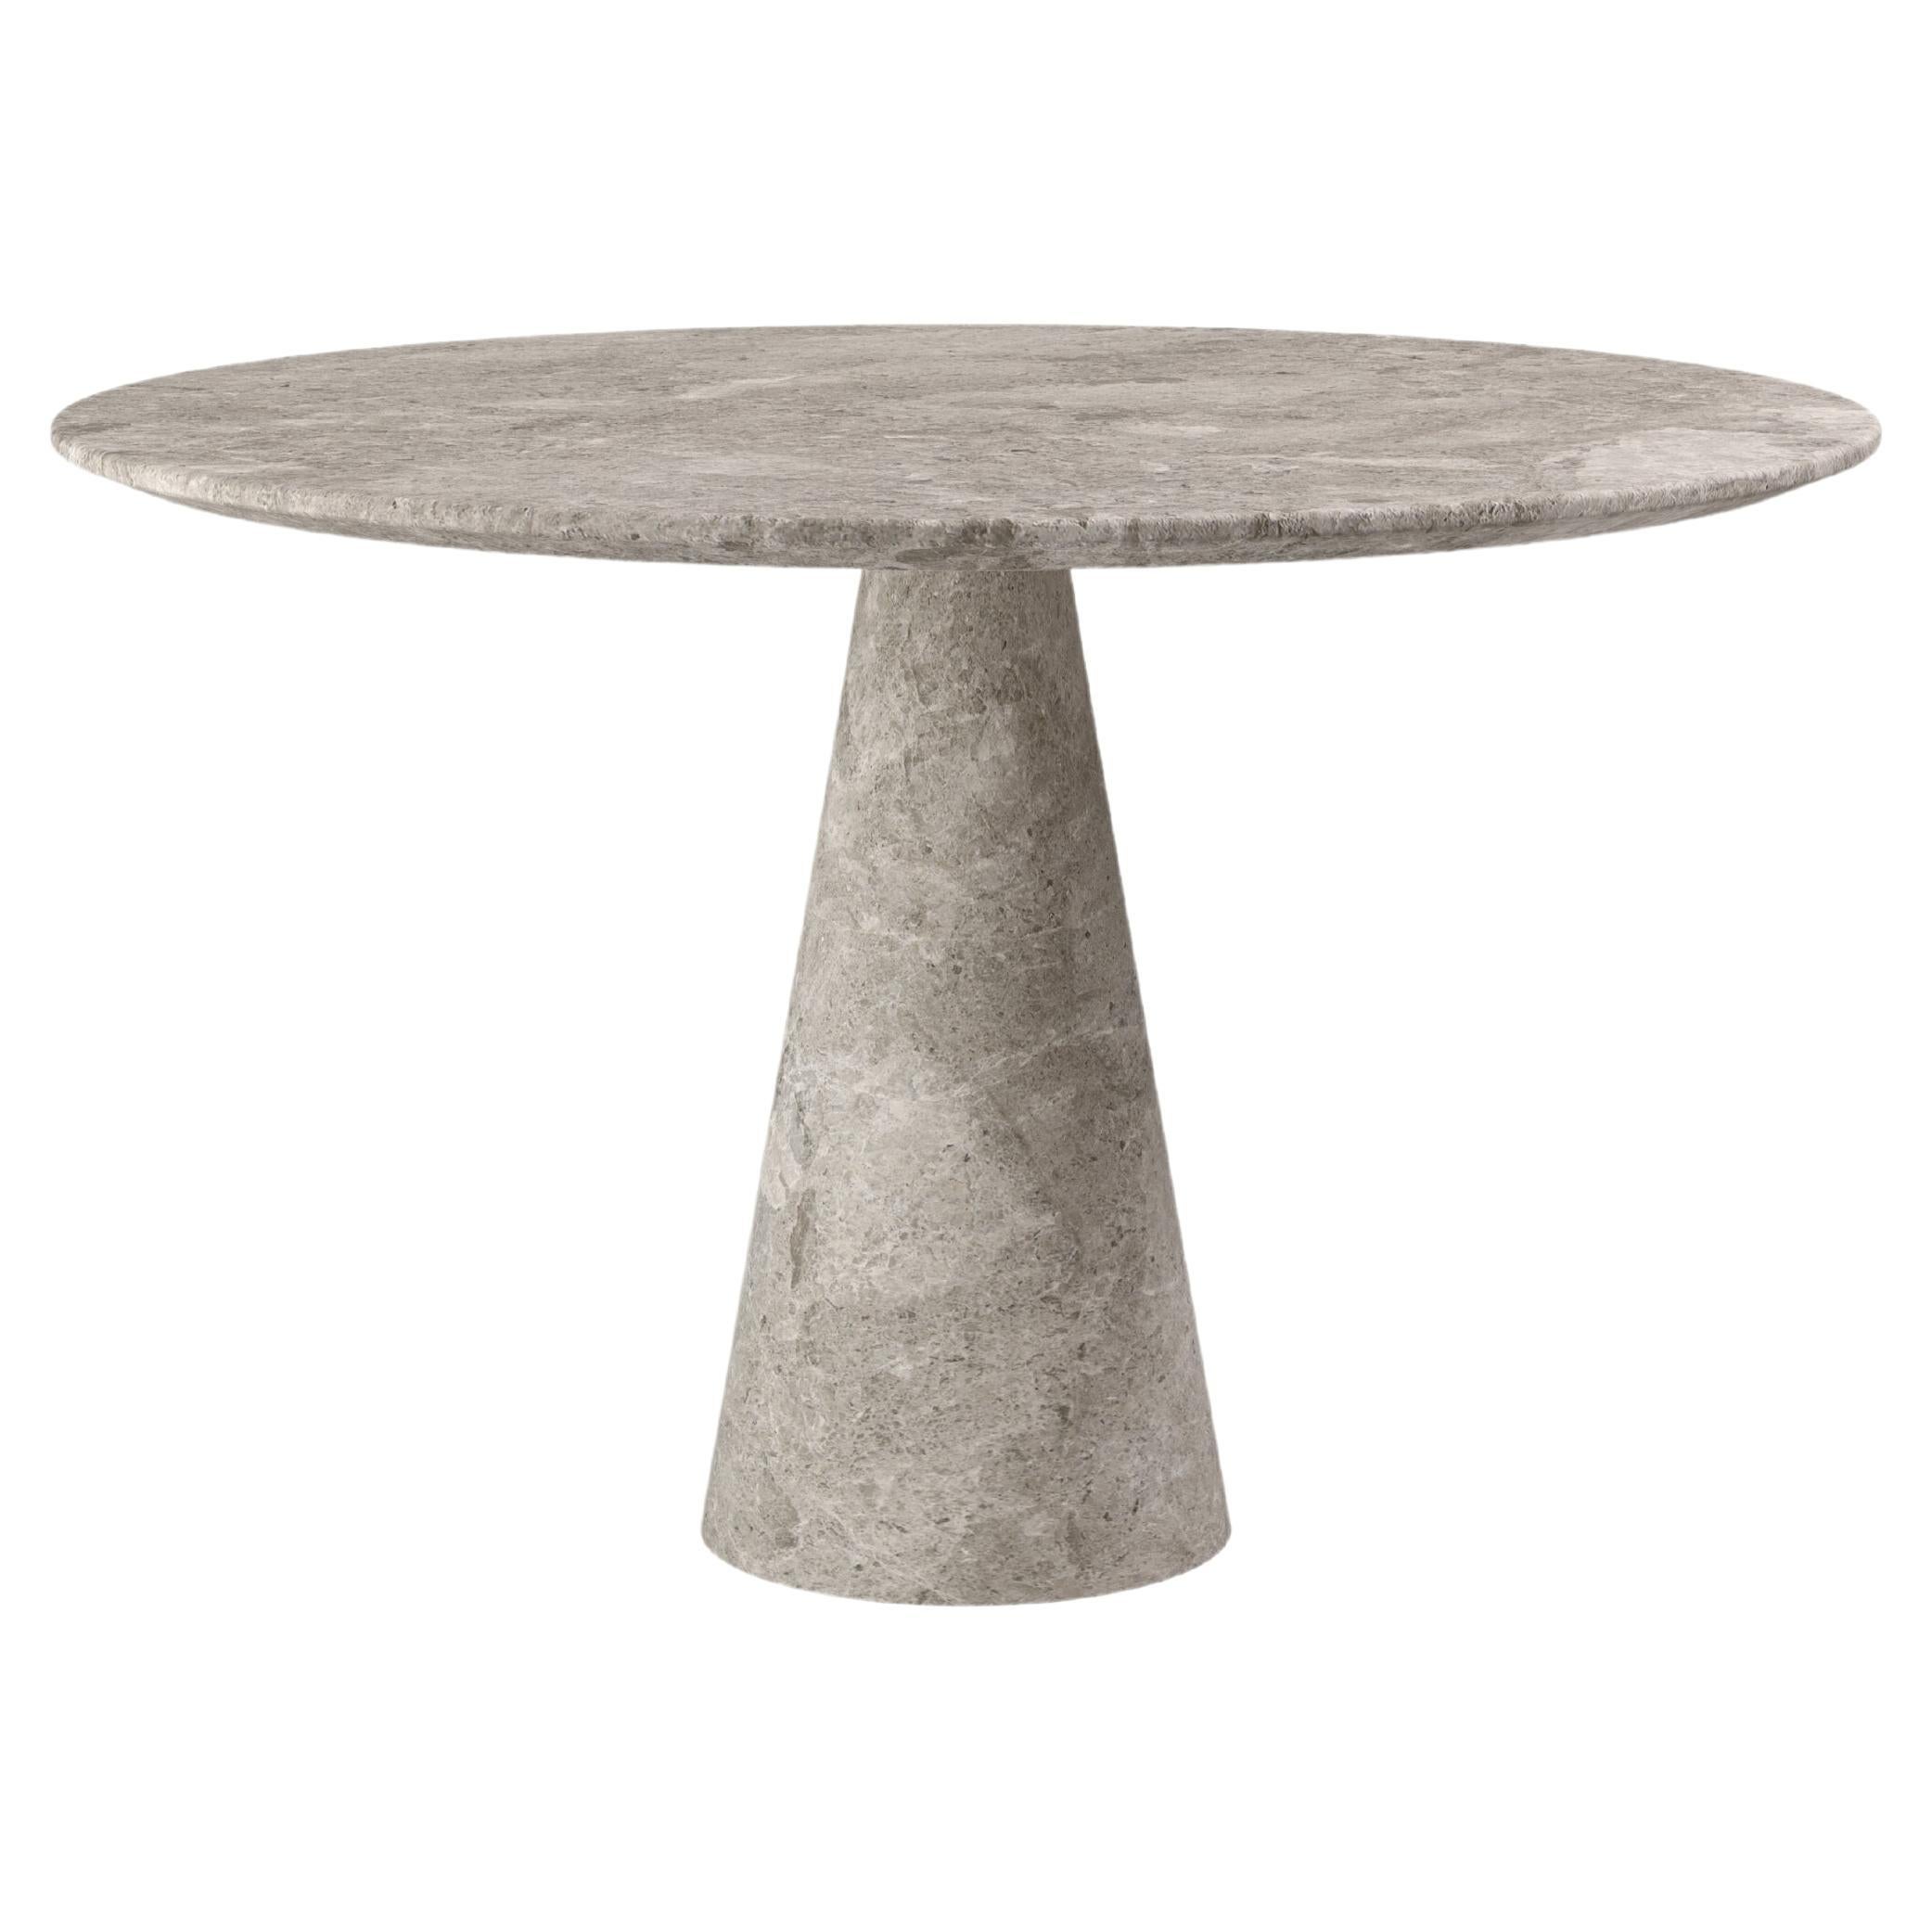 FORM(LA) Cono Round Dining Table 36”L x 36”W x 30”H Tundra Gray Marble For Sale